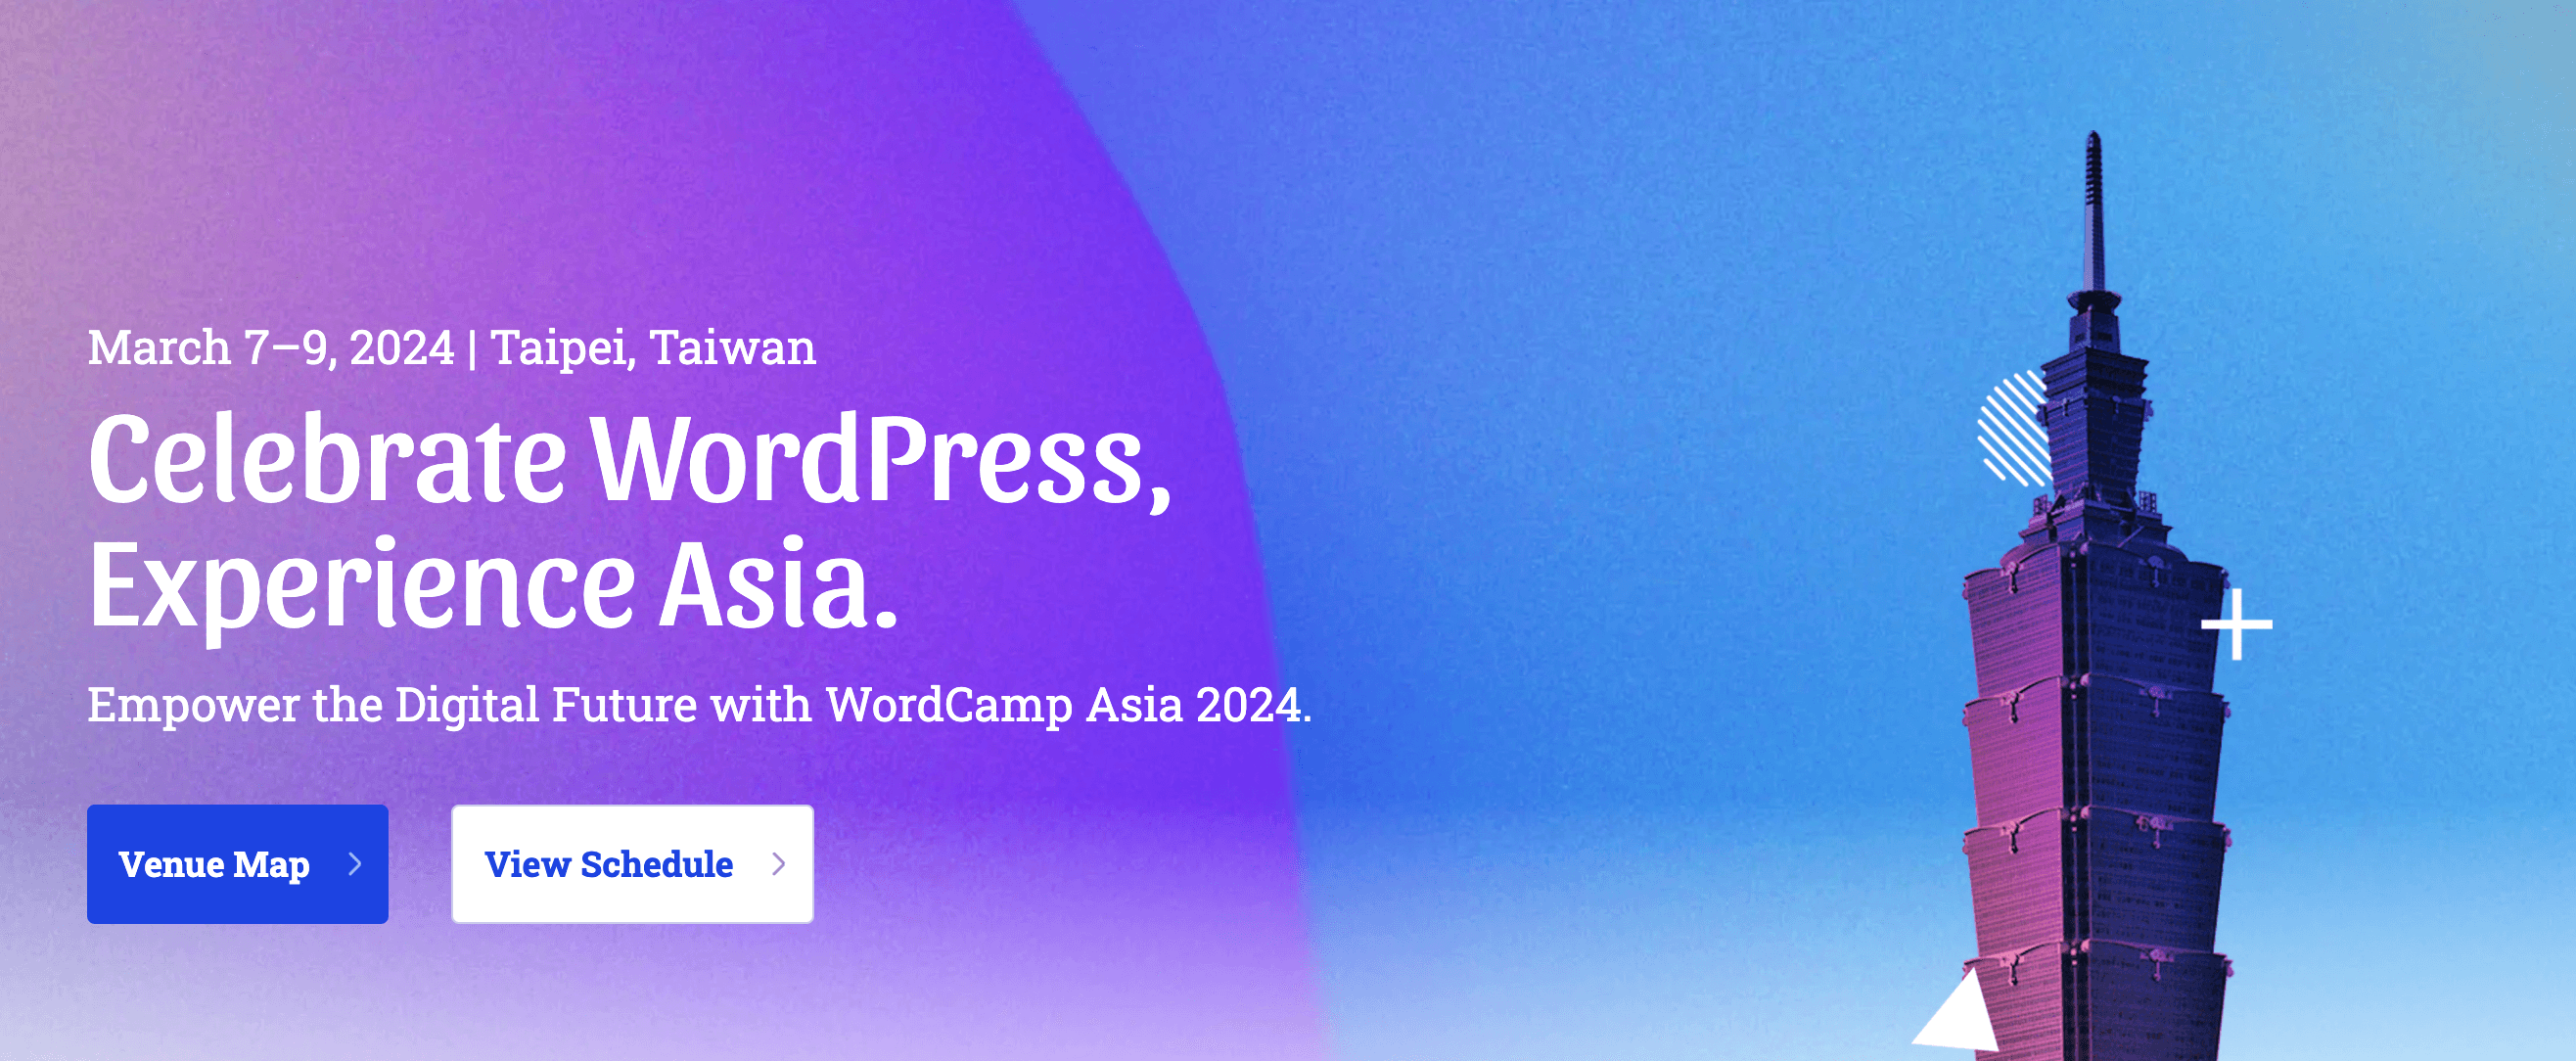 WordCamp Asia 2024